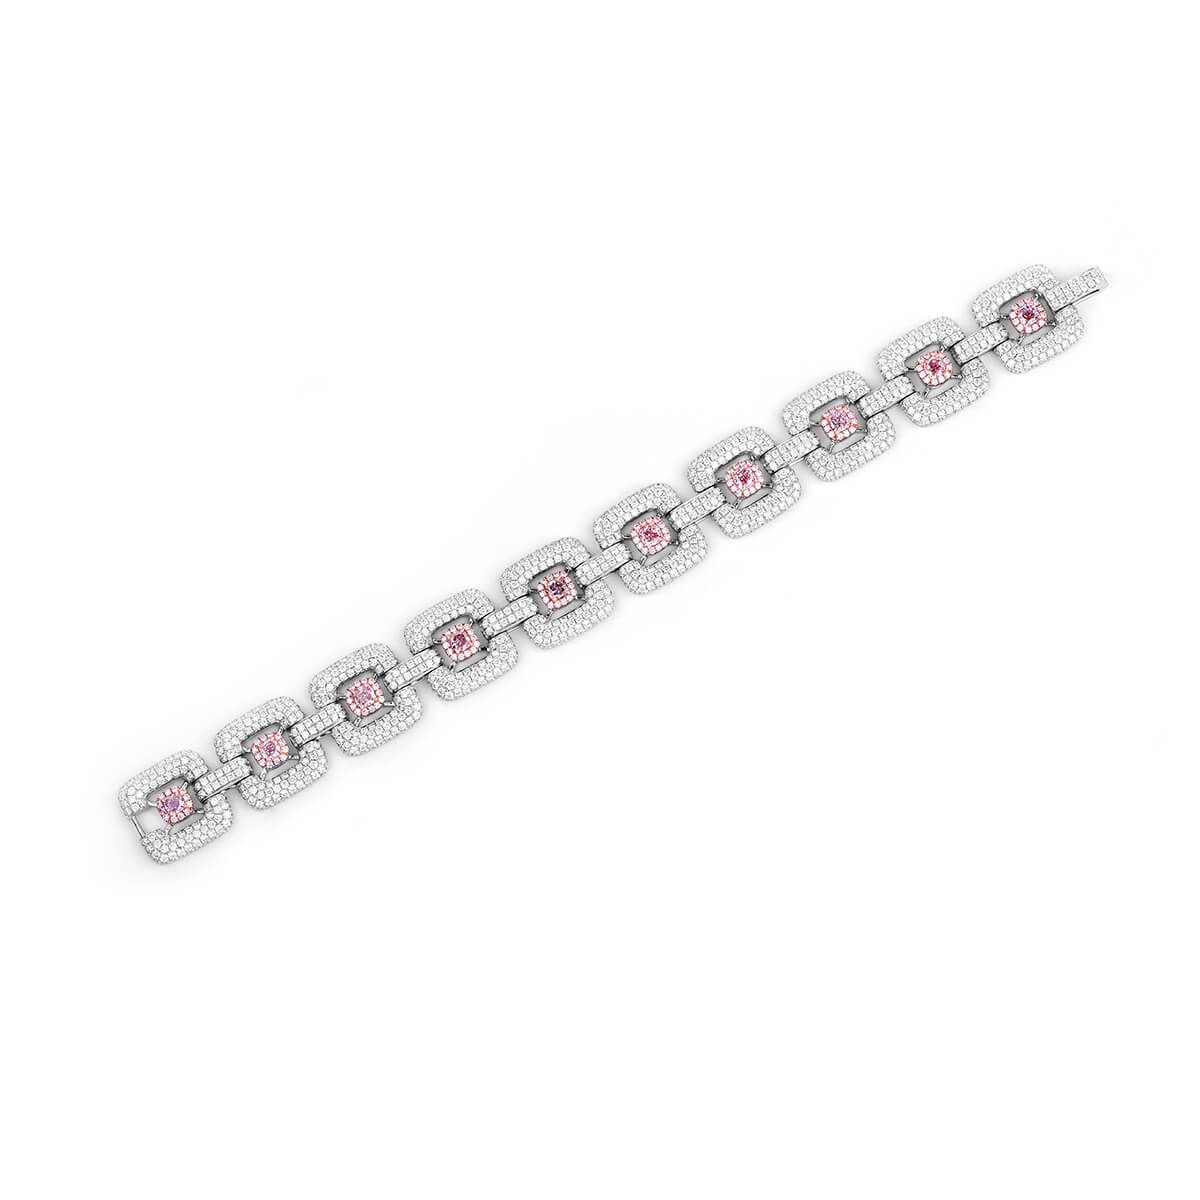 Very Light Pink Diamond Bracelet, 15.06 Ct. TW, Radiant shape, GIA Certified, JCBF05403948